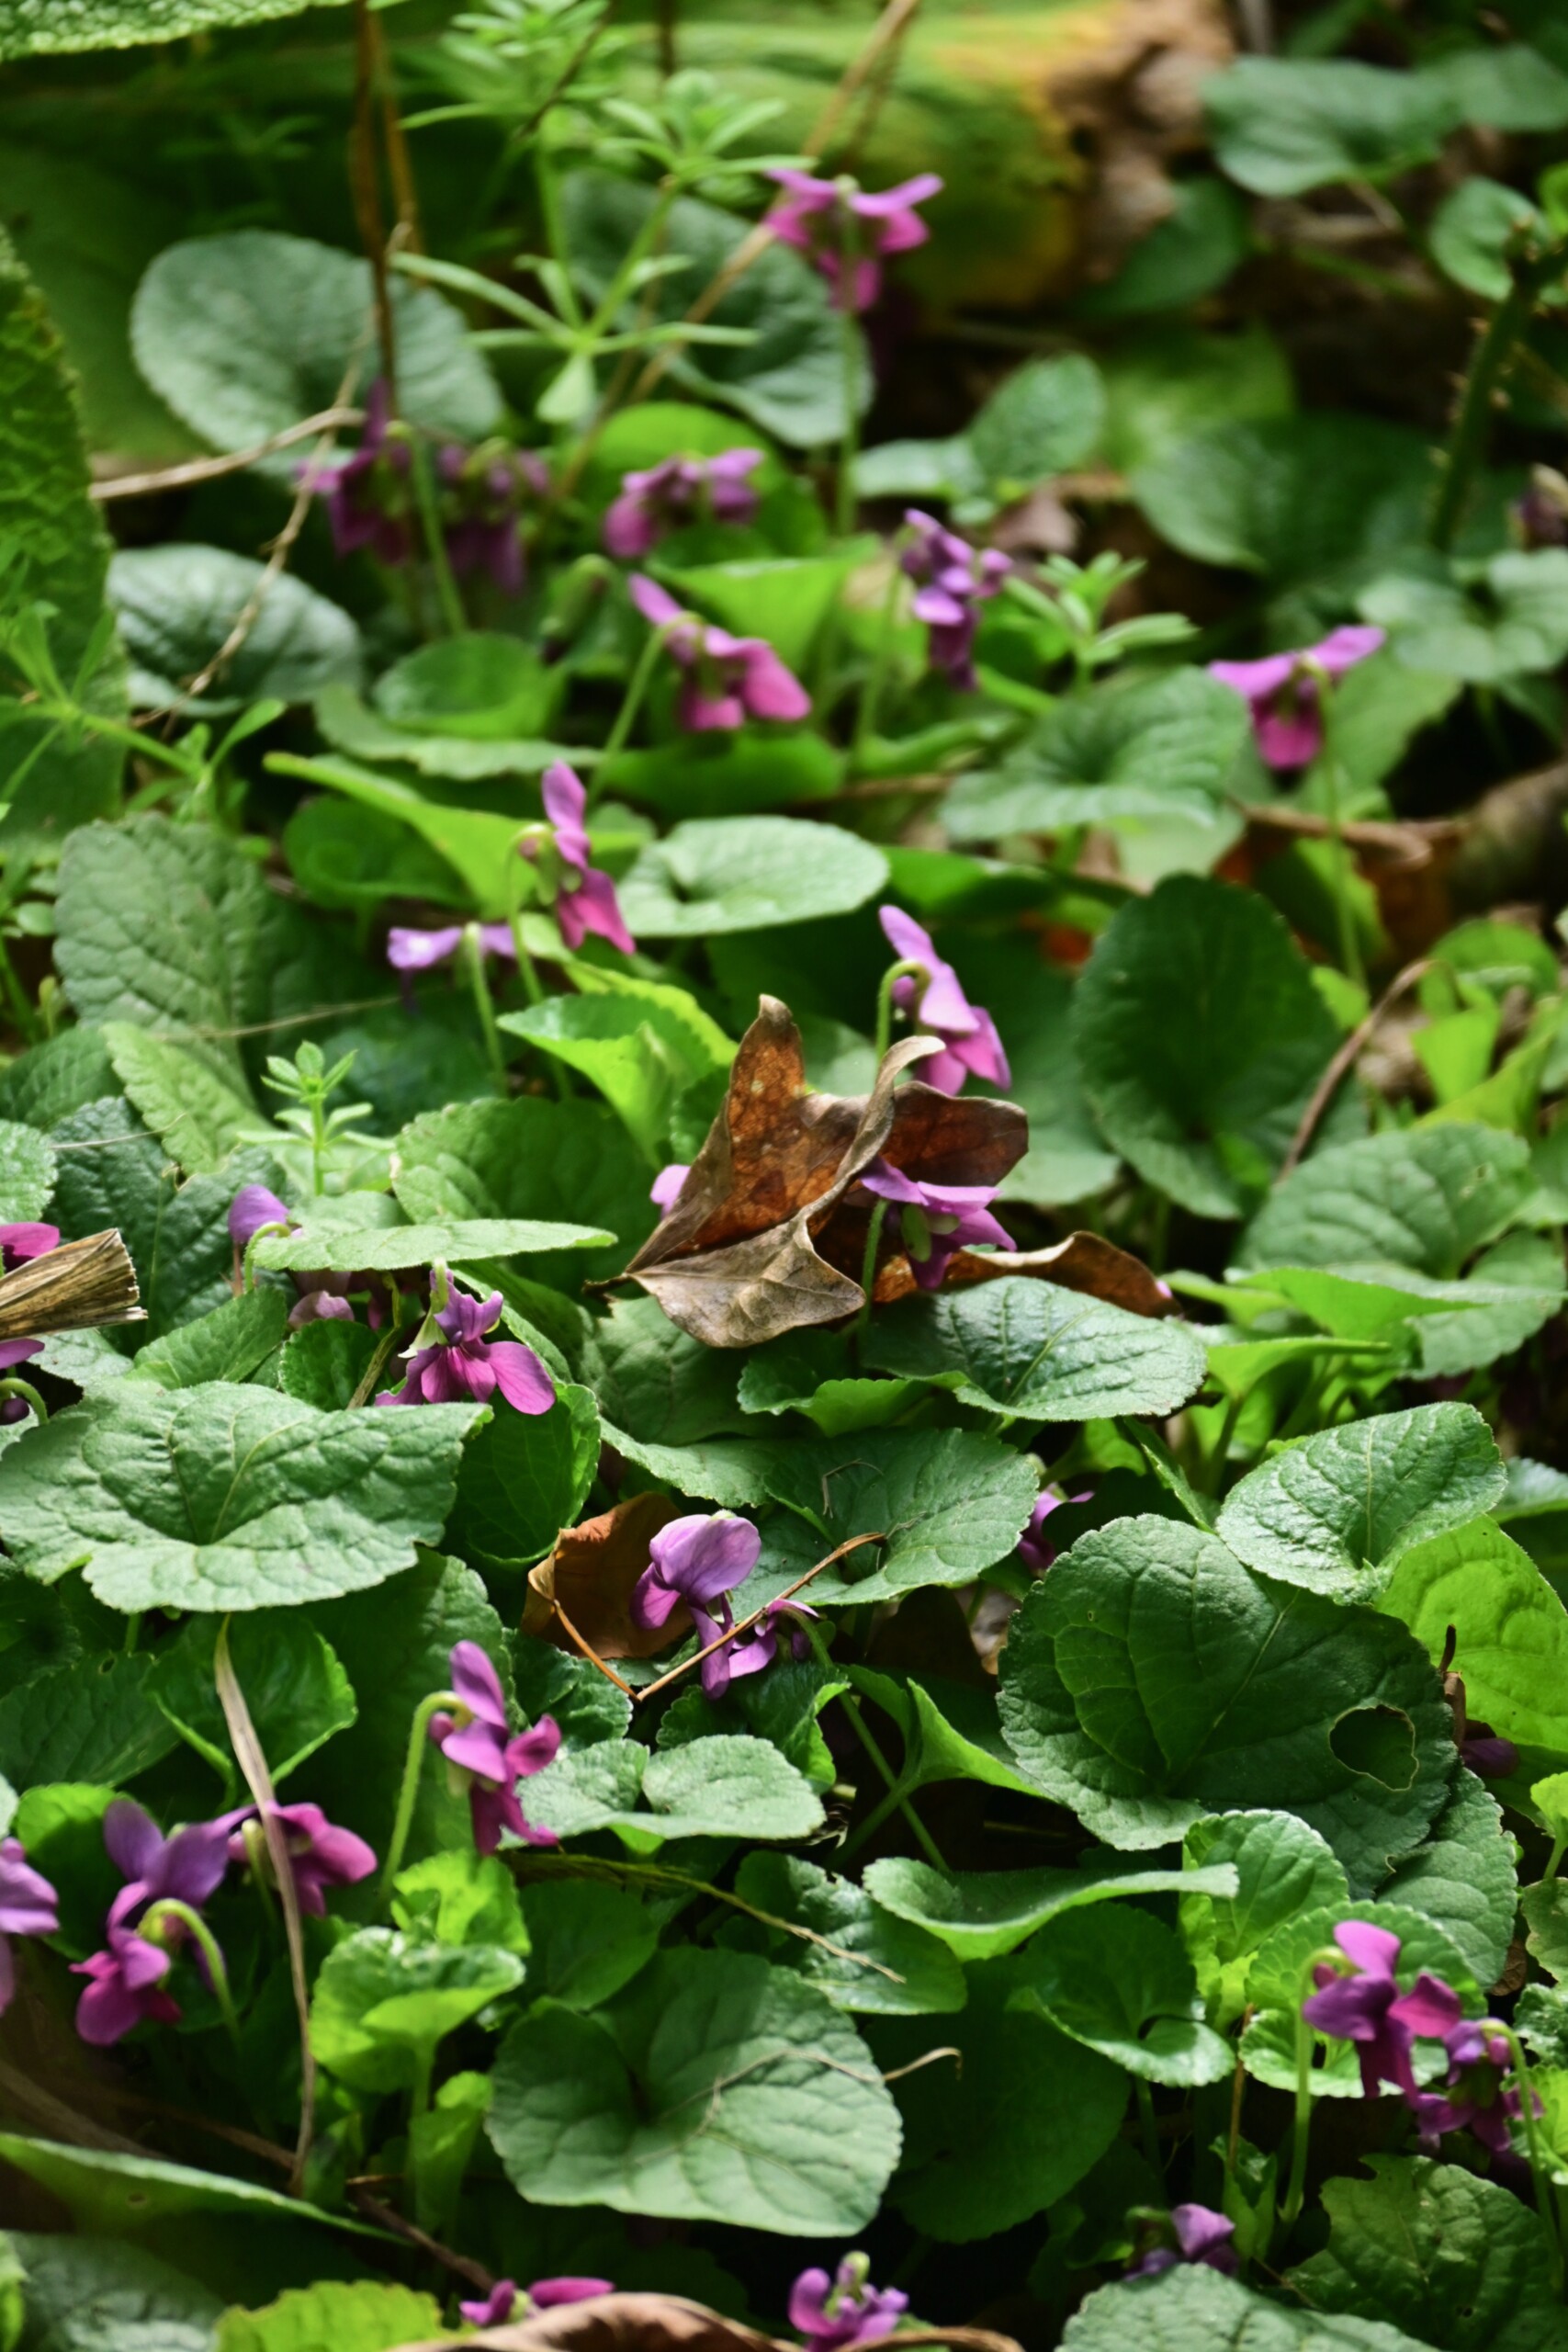 PLANT OF THE WEEK #69: Viola odorata